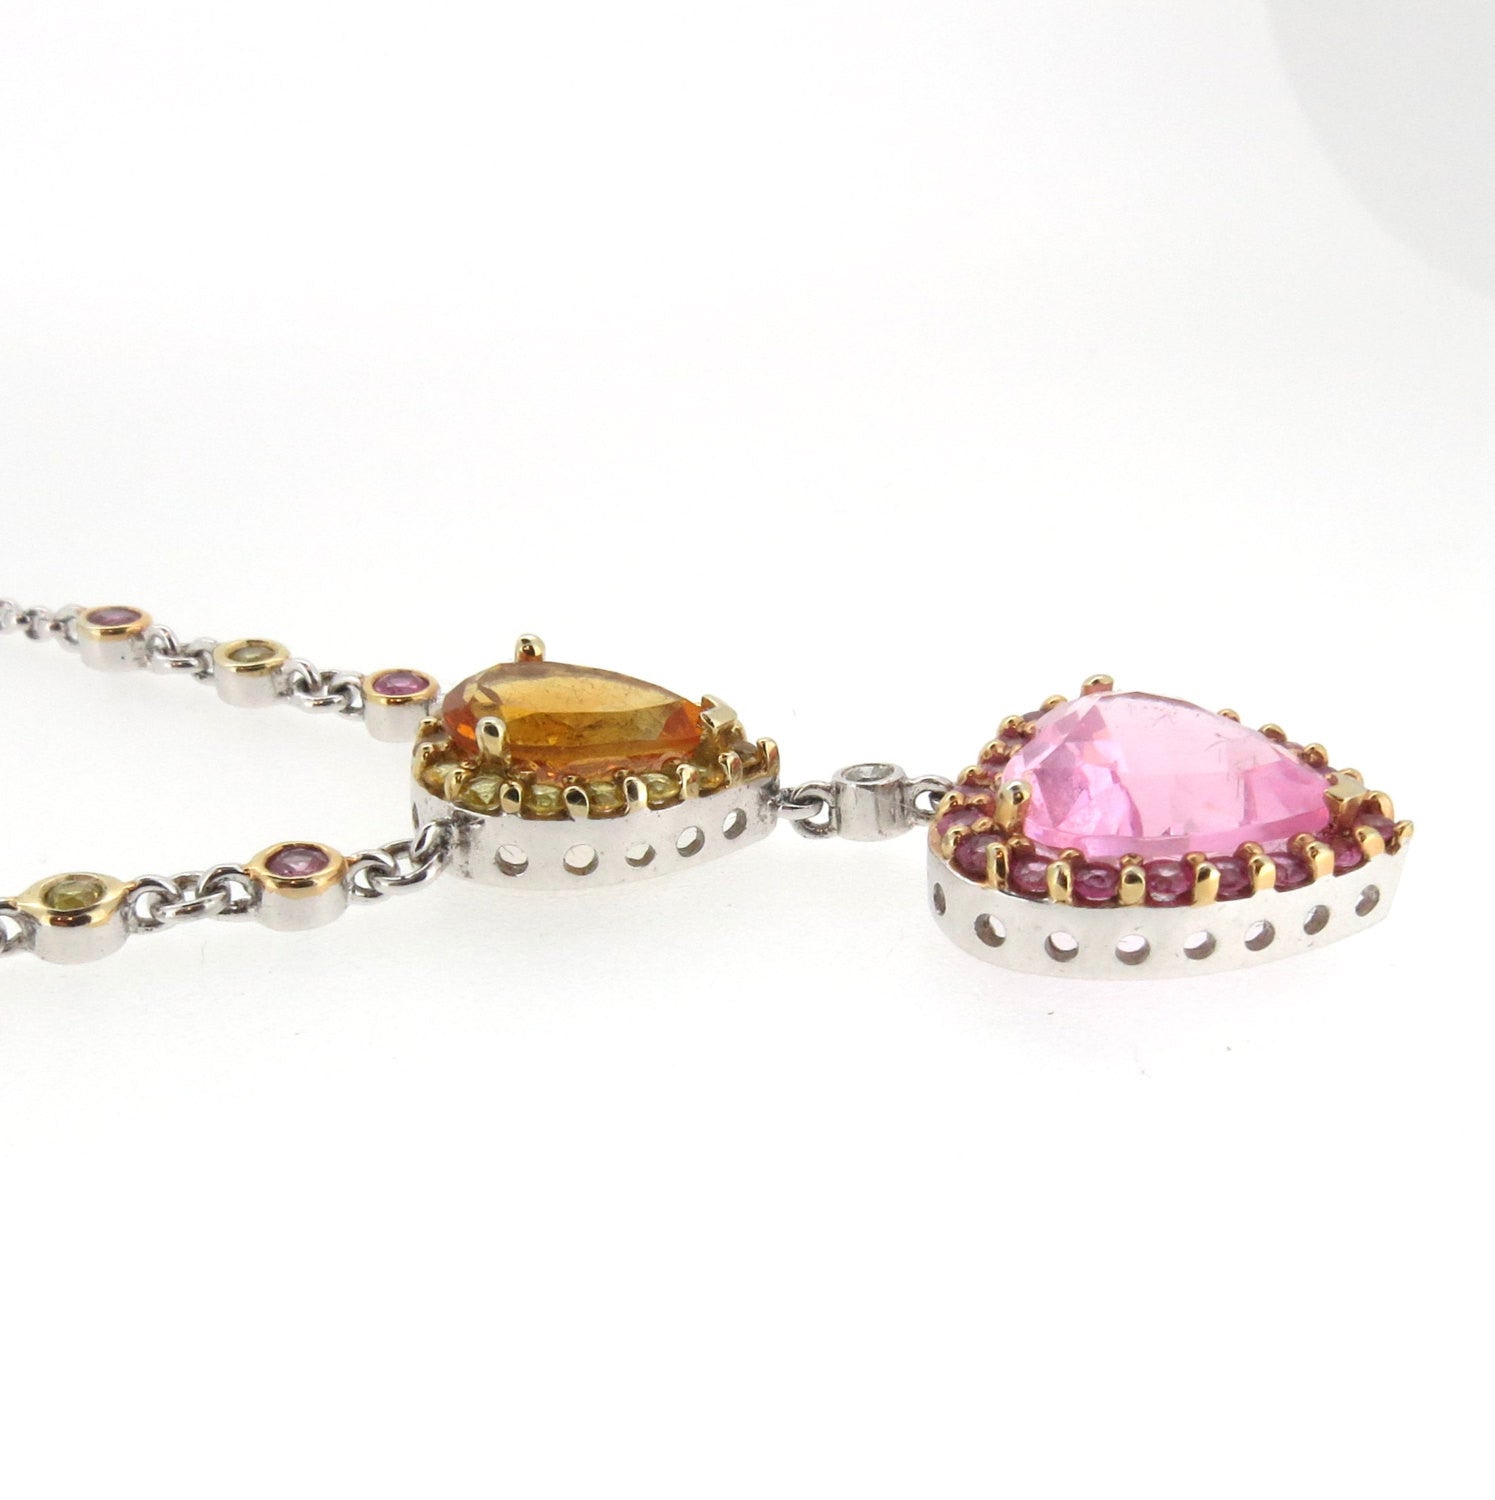 SALE! Valentine Heart Gemstone Necklace/Pendant